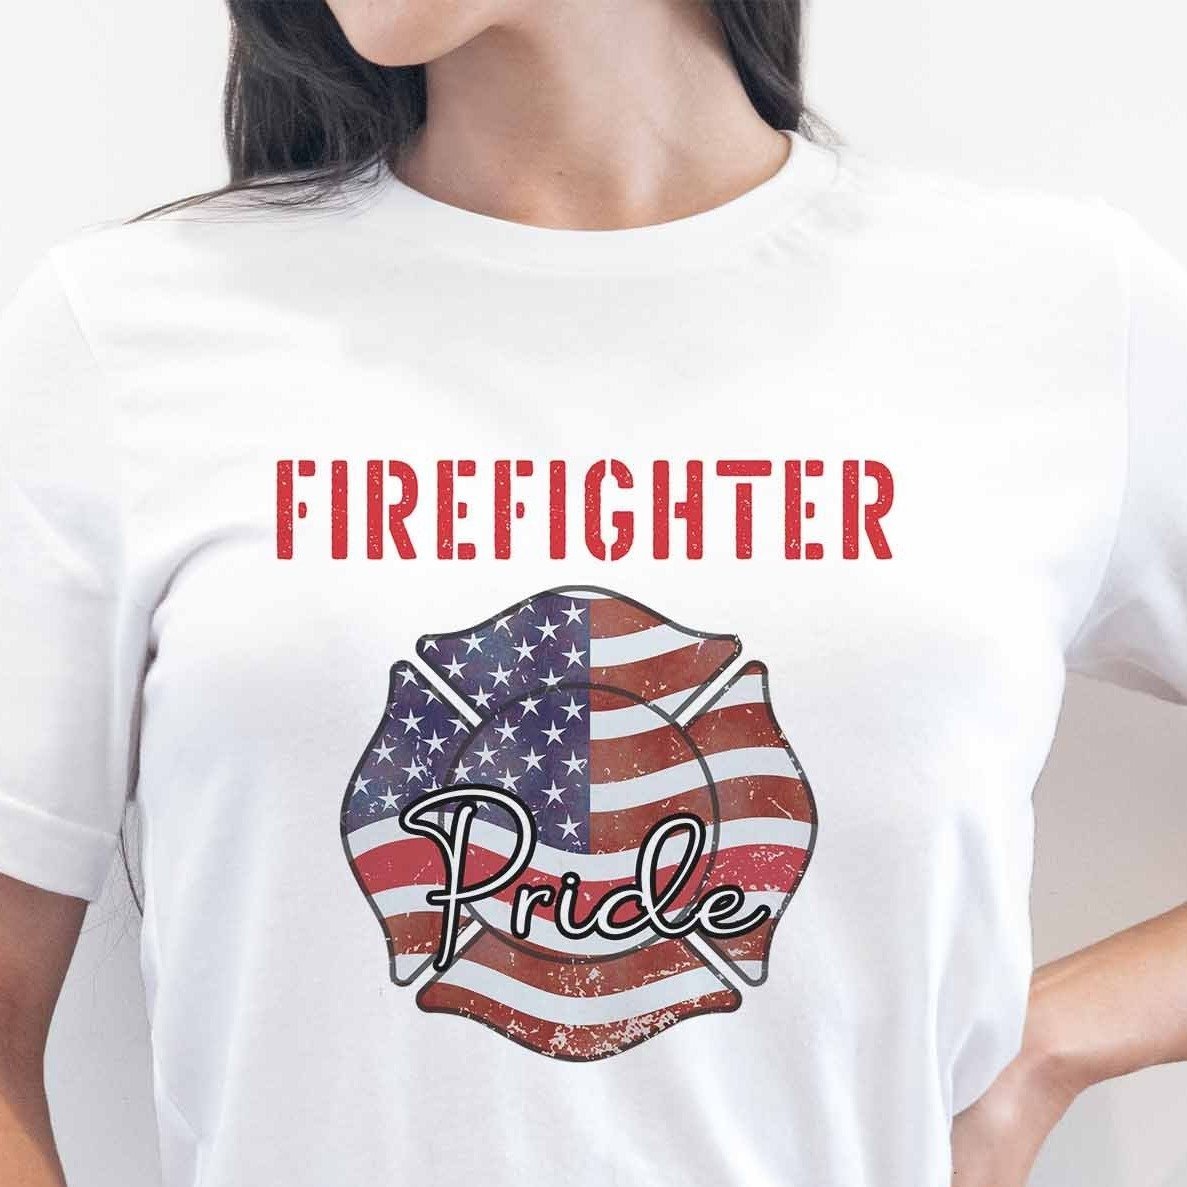 Firefighter Pride - My Custom Tee Party